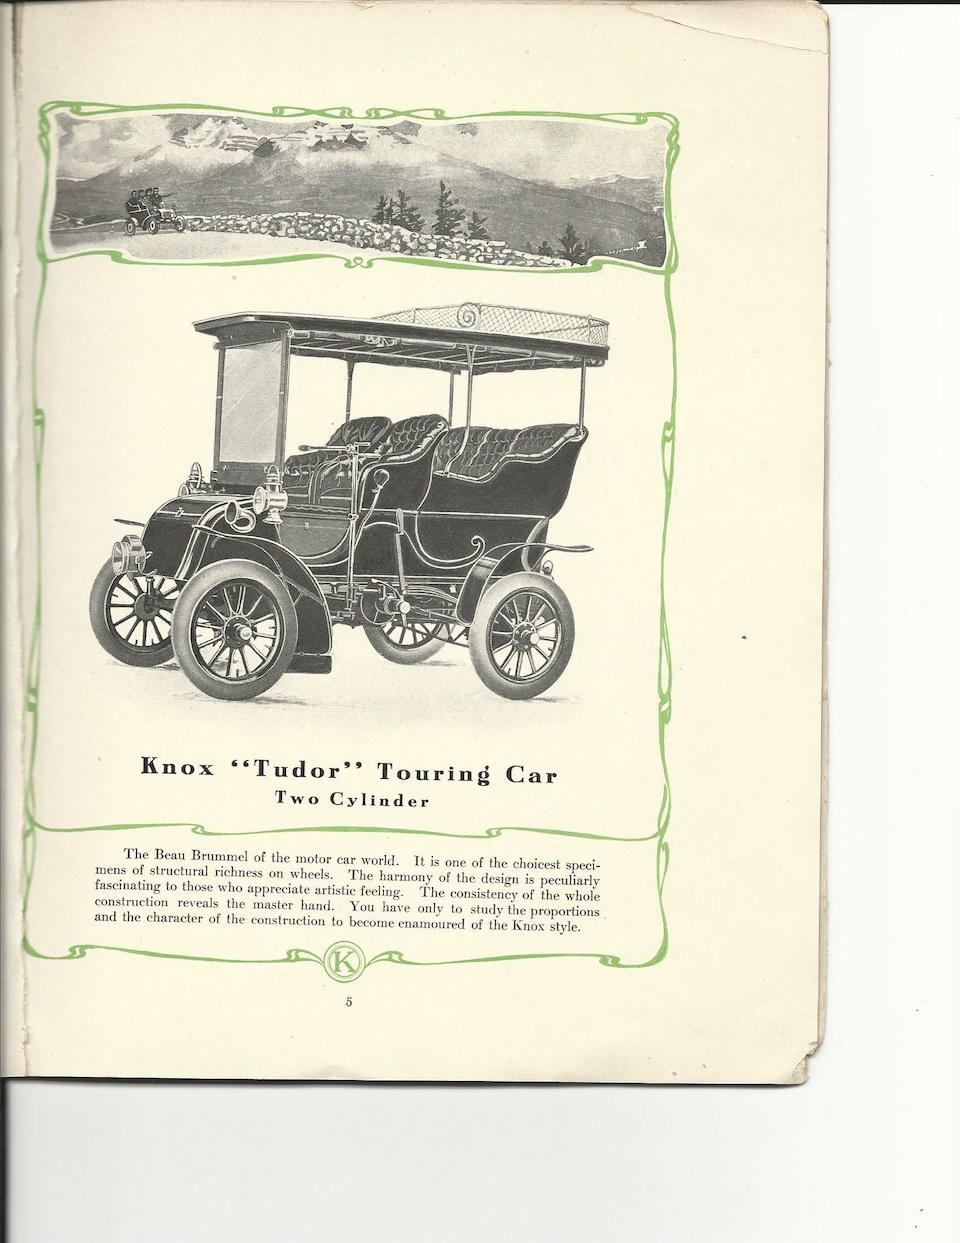 <b>1904 Knox 16/18hp "TUDOR" 5-PASSENGER TOURING</b><br />Chassis no. 312<br />Engine no. 839D